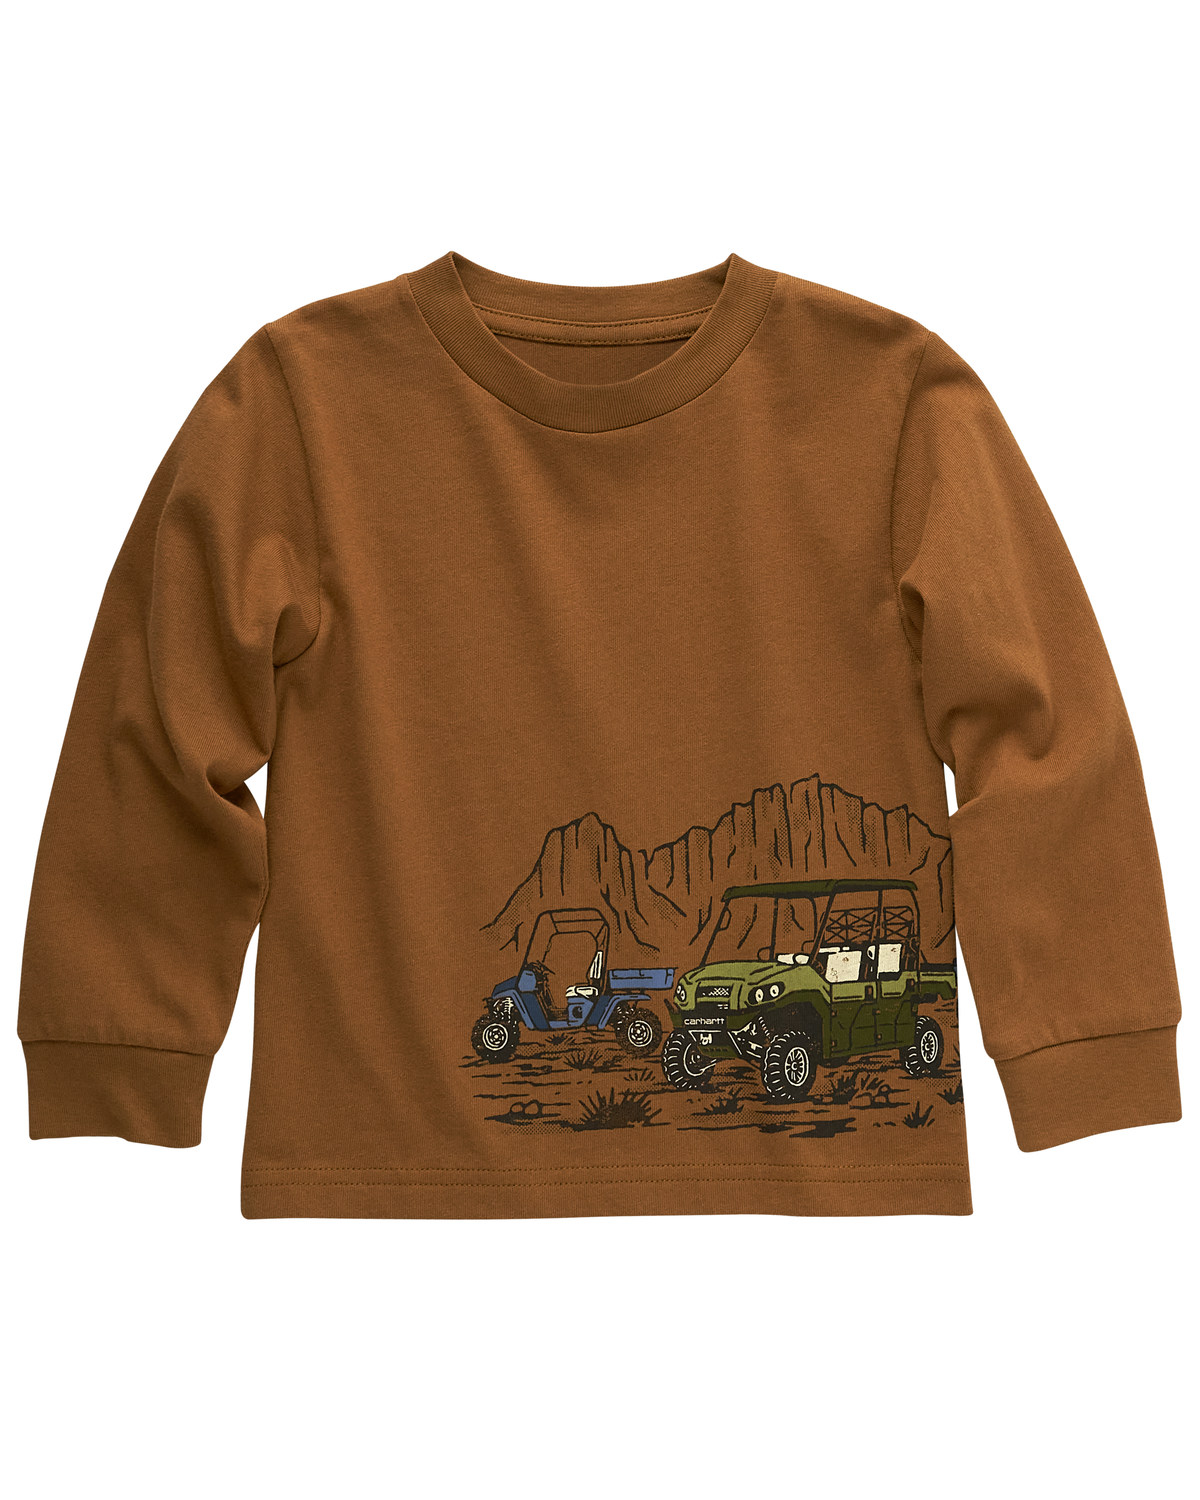 Carhartt Toddler Boys' Vehicle Wrap Long Sleeve Graphic T-Shirt